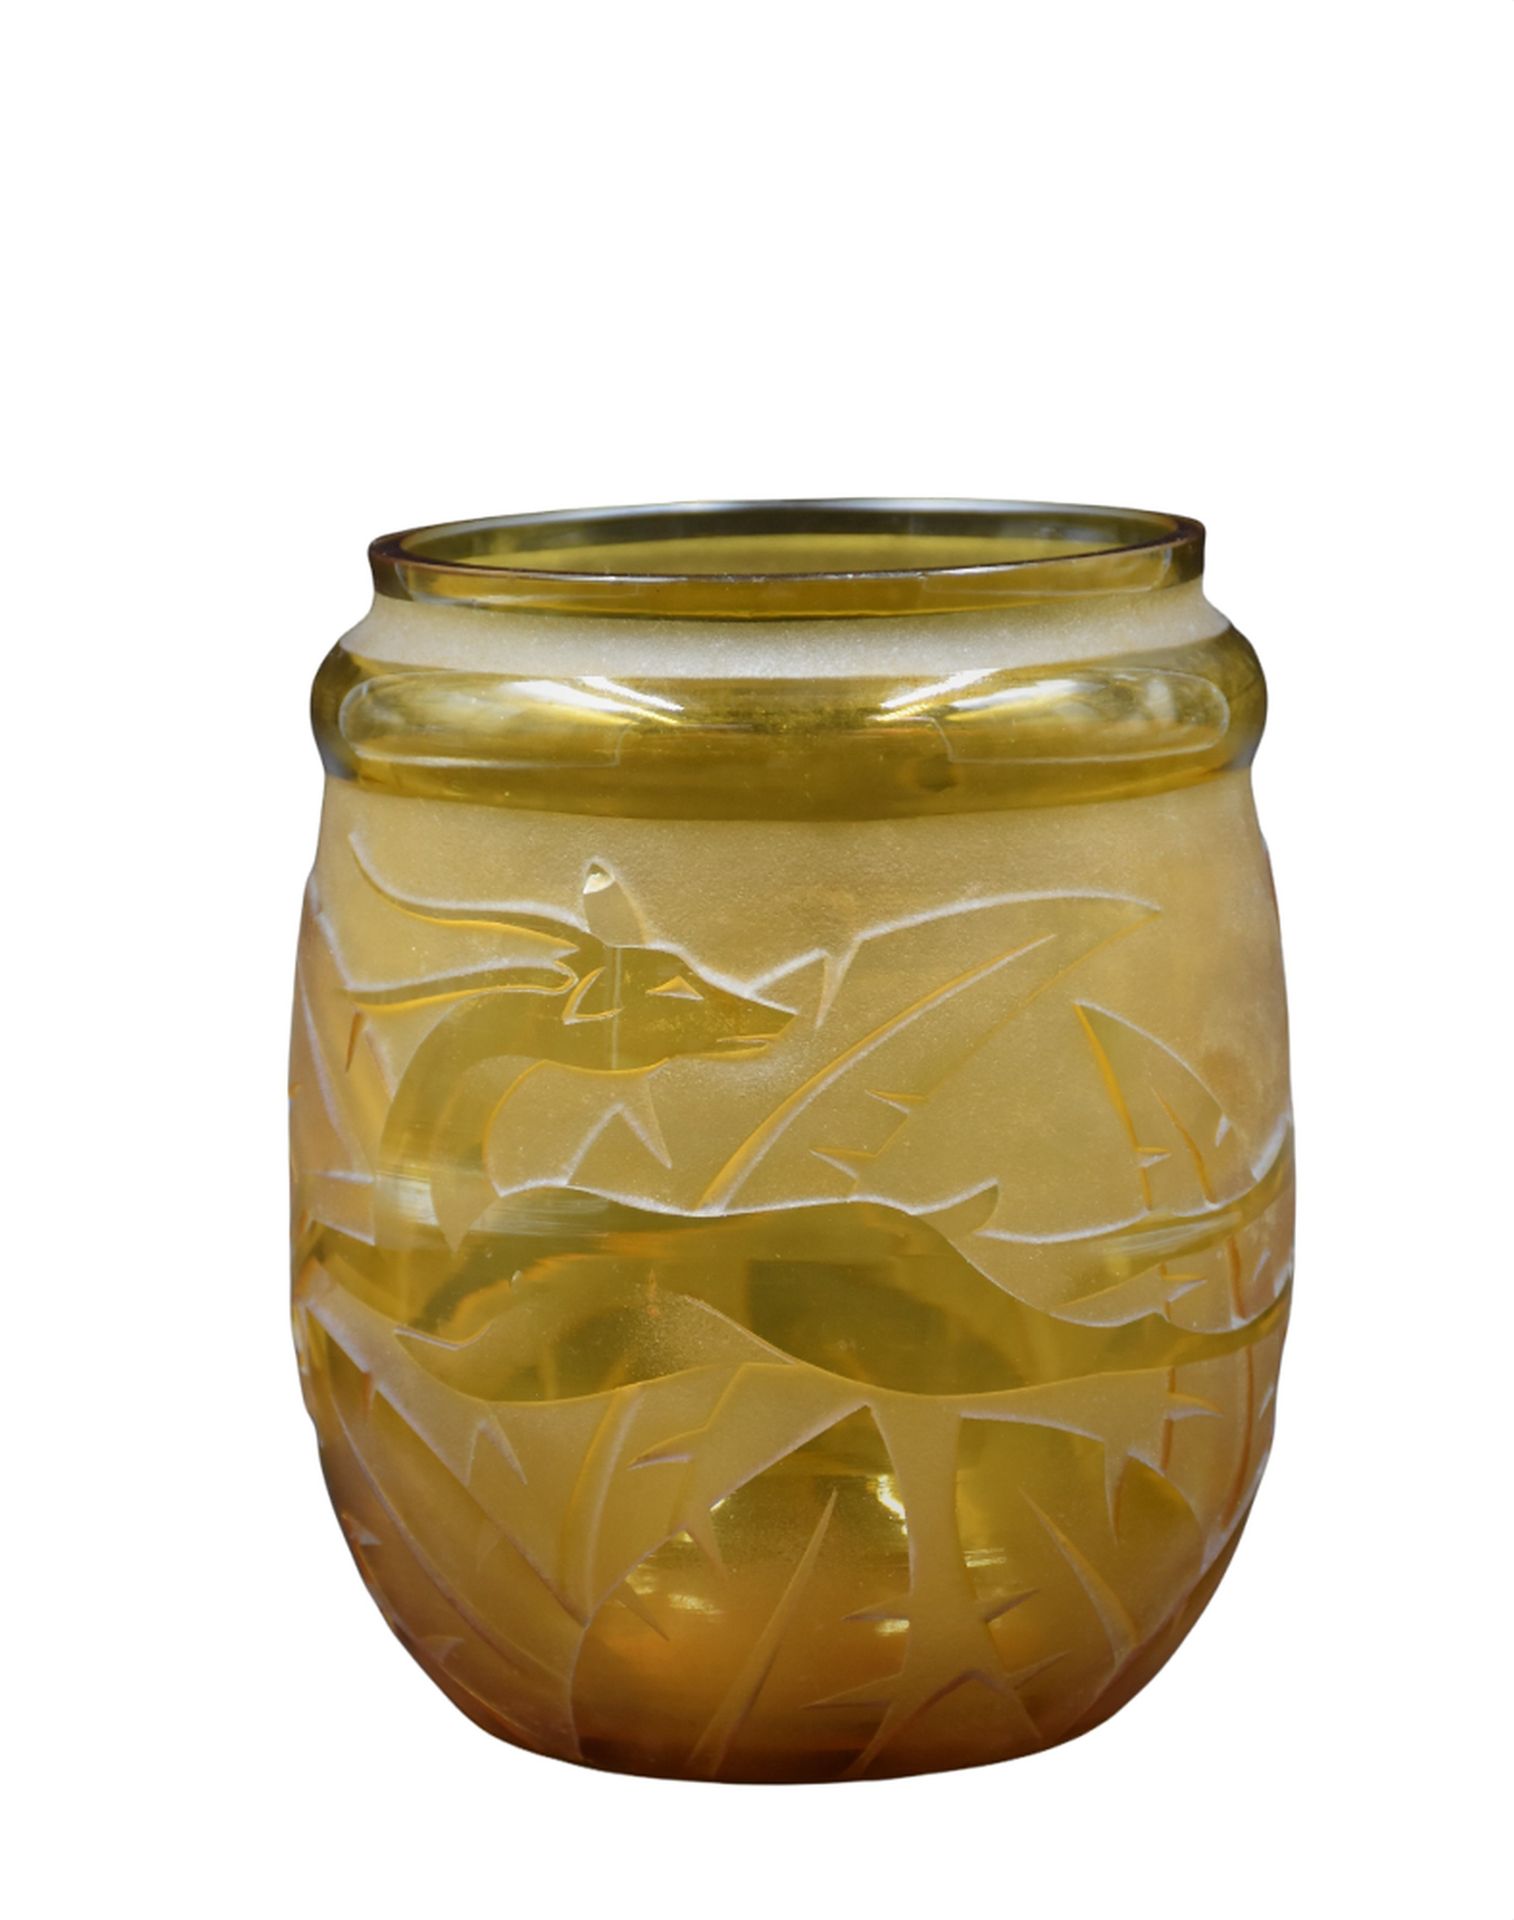 Null 来自中部地区的装饰艺术喷砂玻璃花瓶。(Scailmont或Manage)。风格化的羚羊装饰。高度：15厘米。 

荷兰：中部地区装饰艺术风格的玻璃房。&hellip;